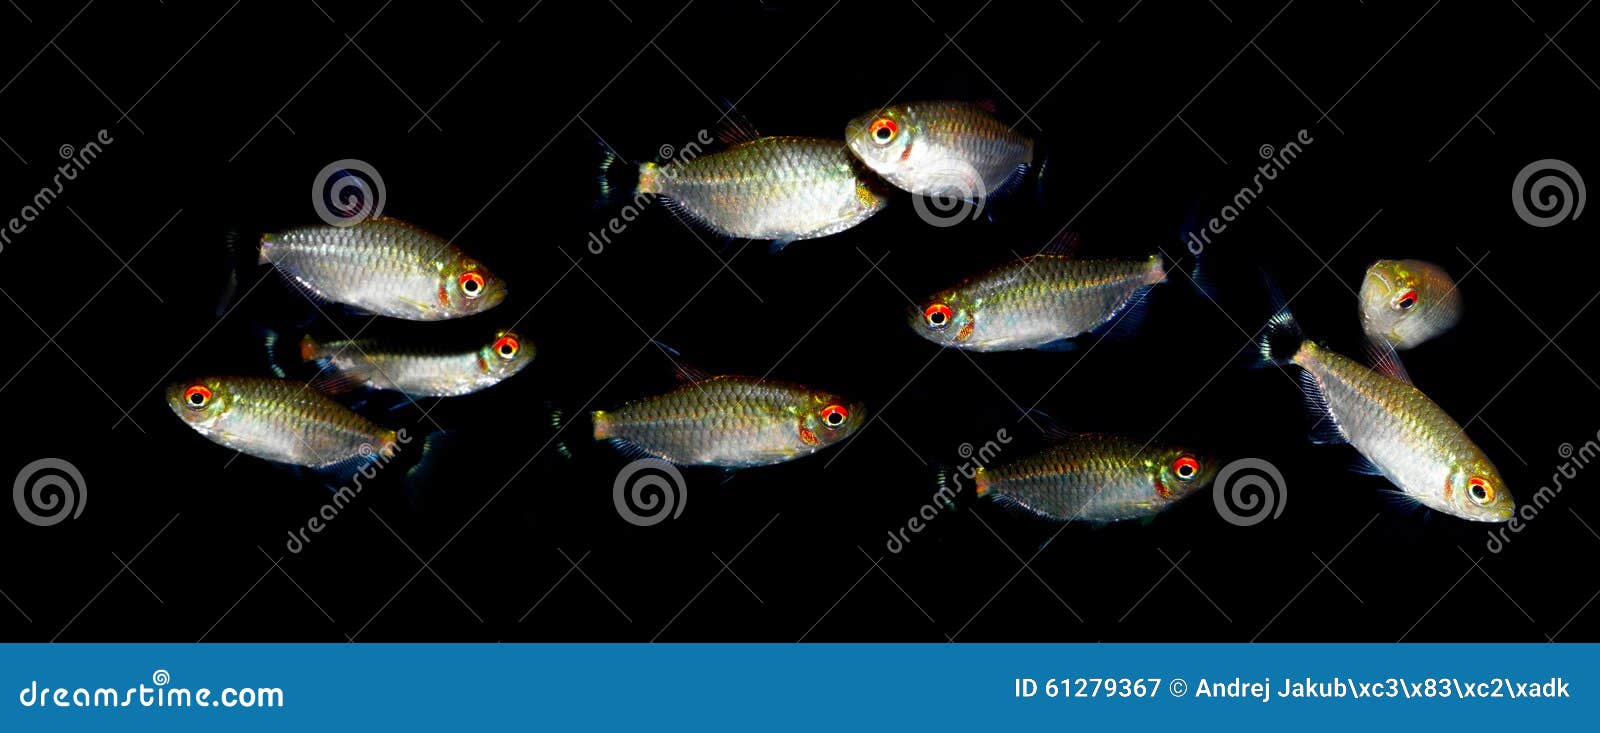 aquaarium fish. characidae family